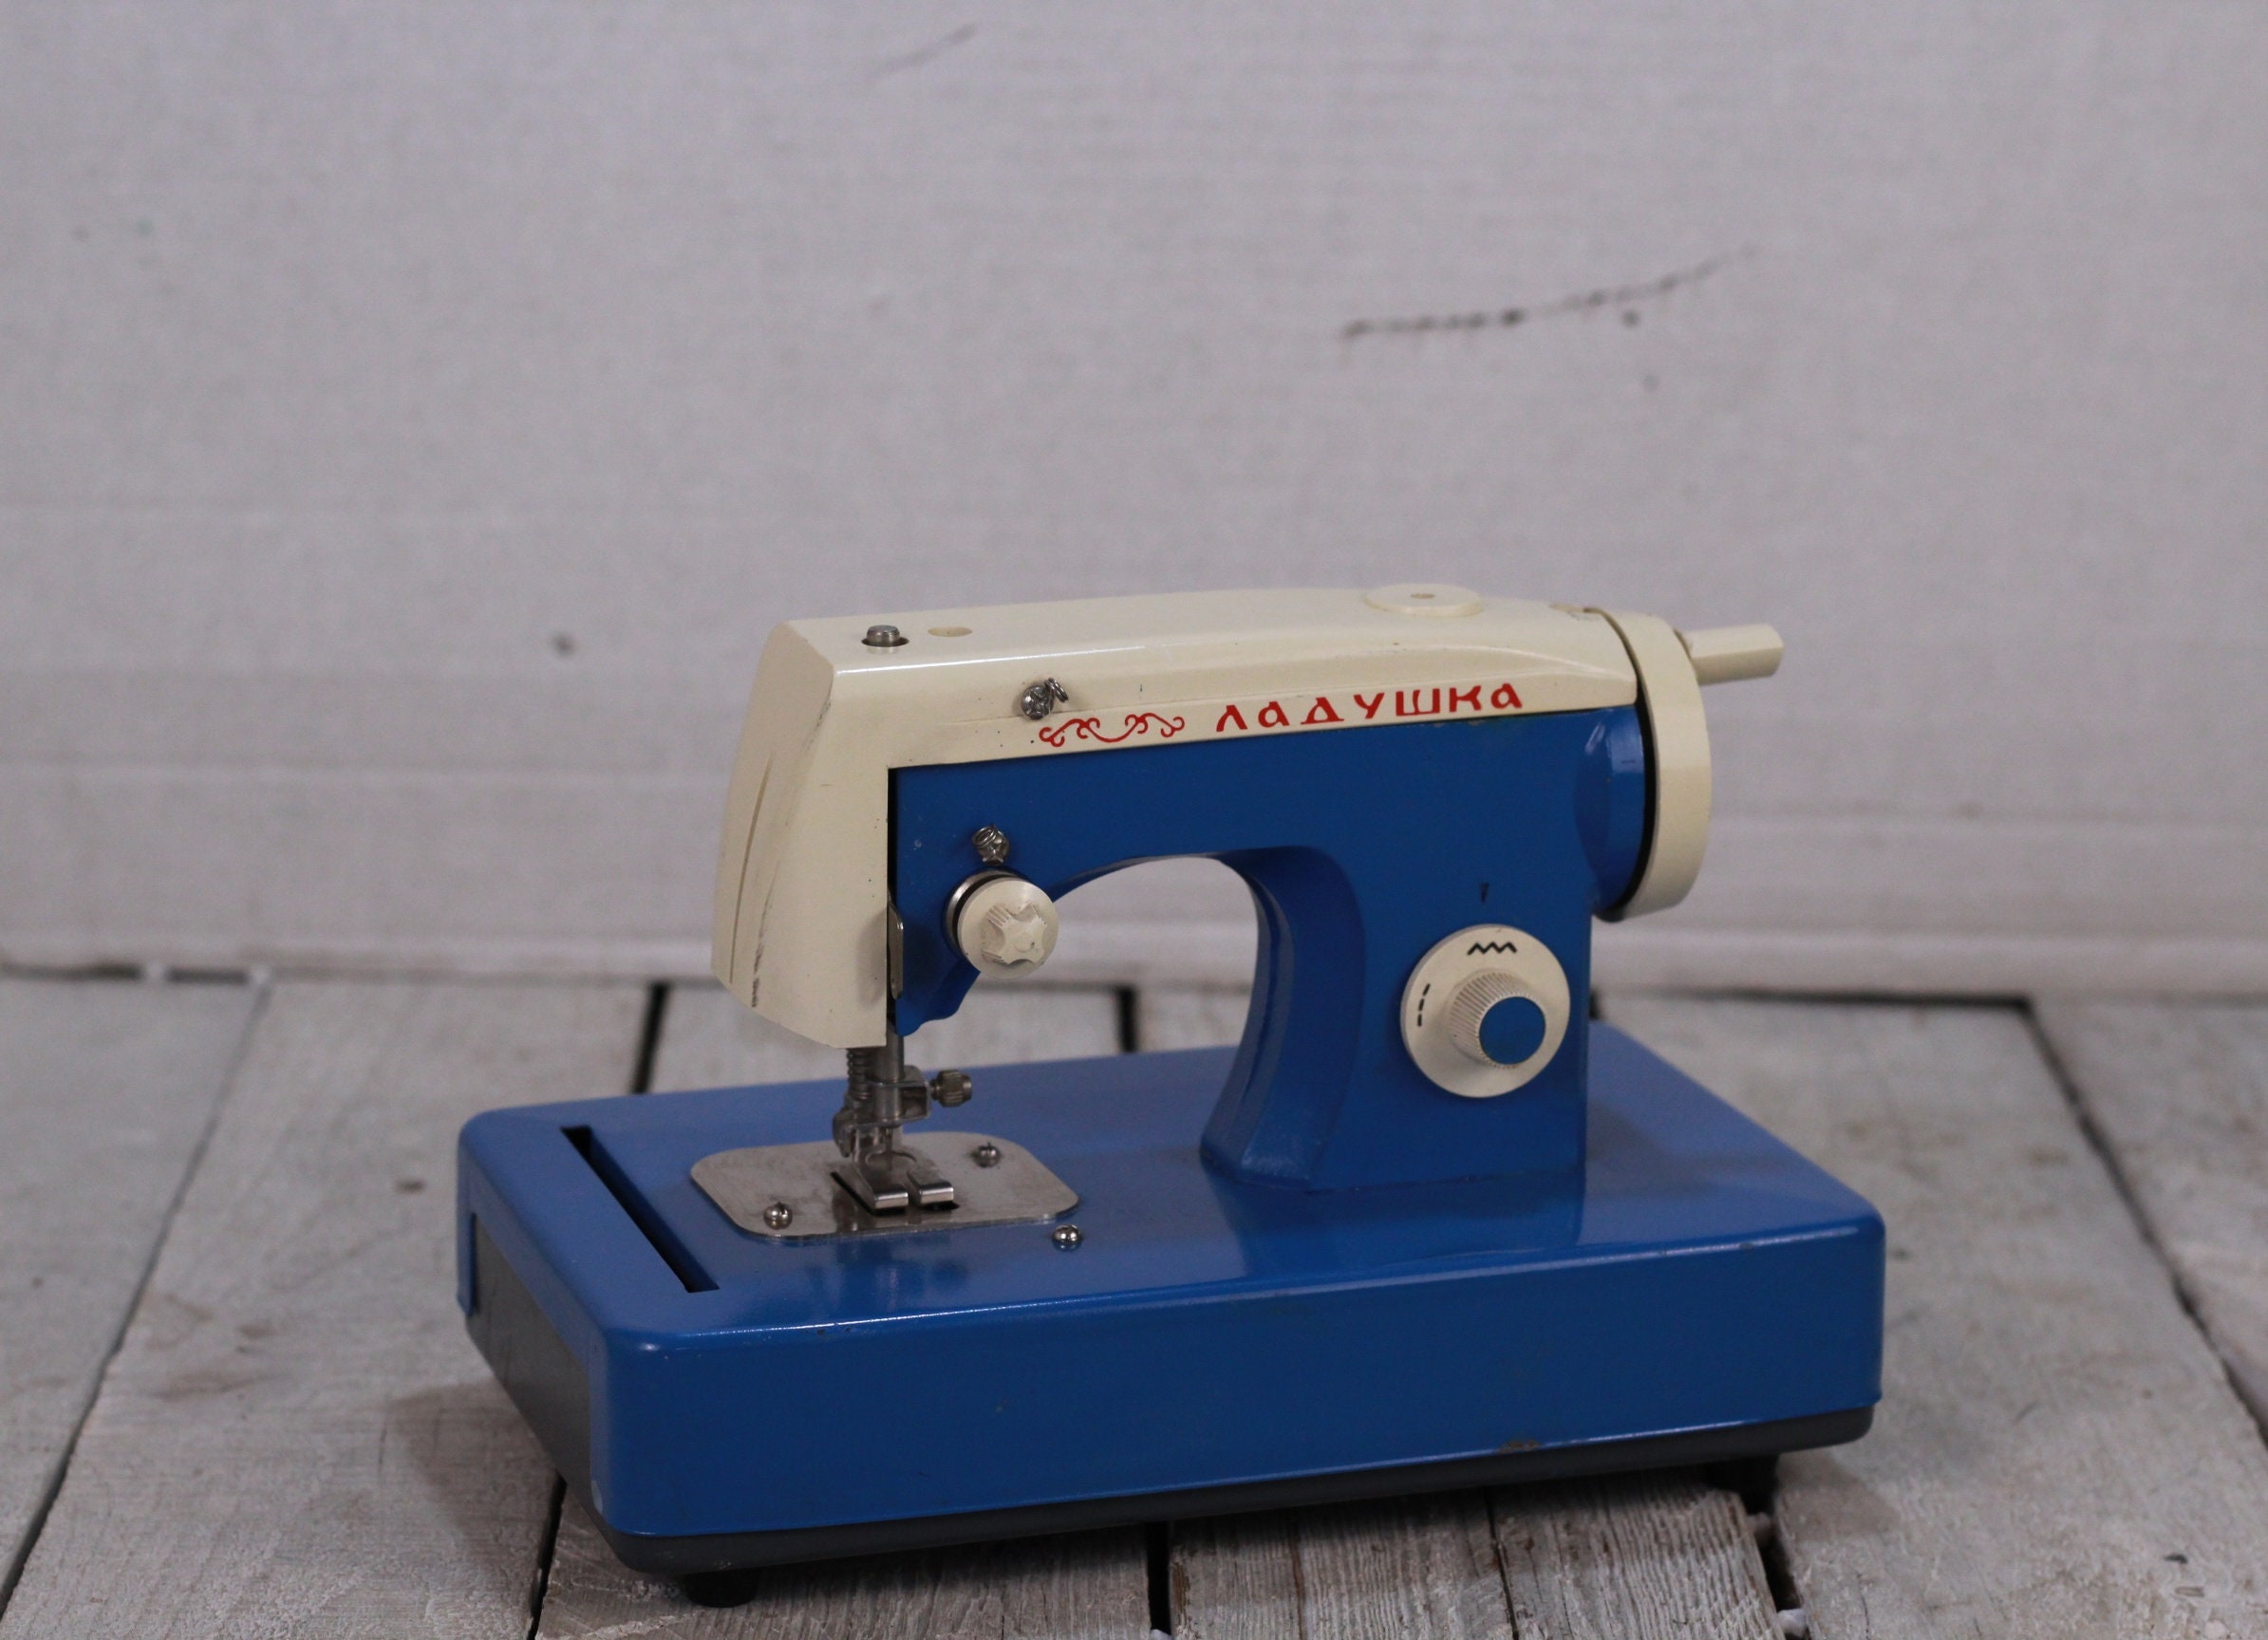 Kids Mini Sewing Machine